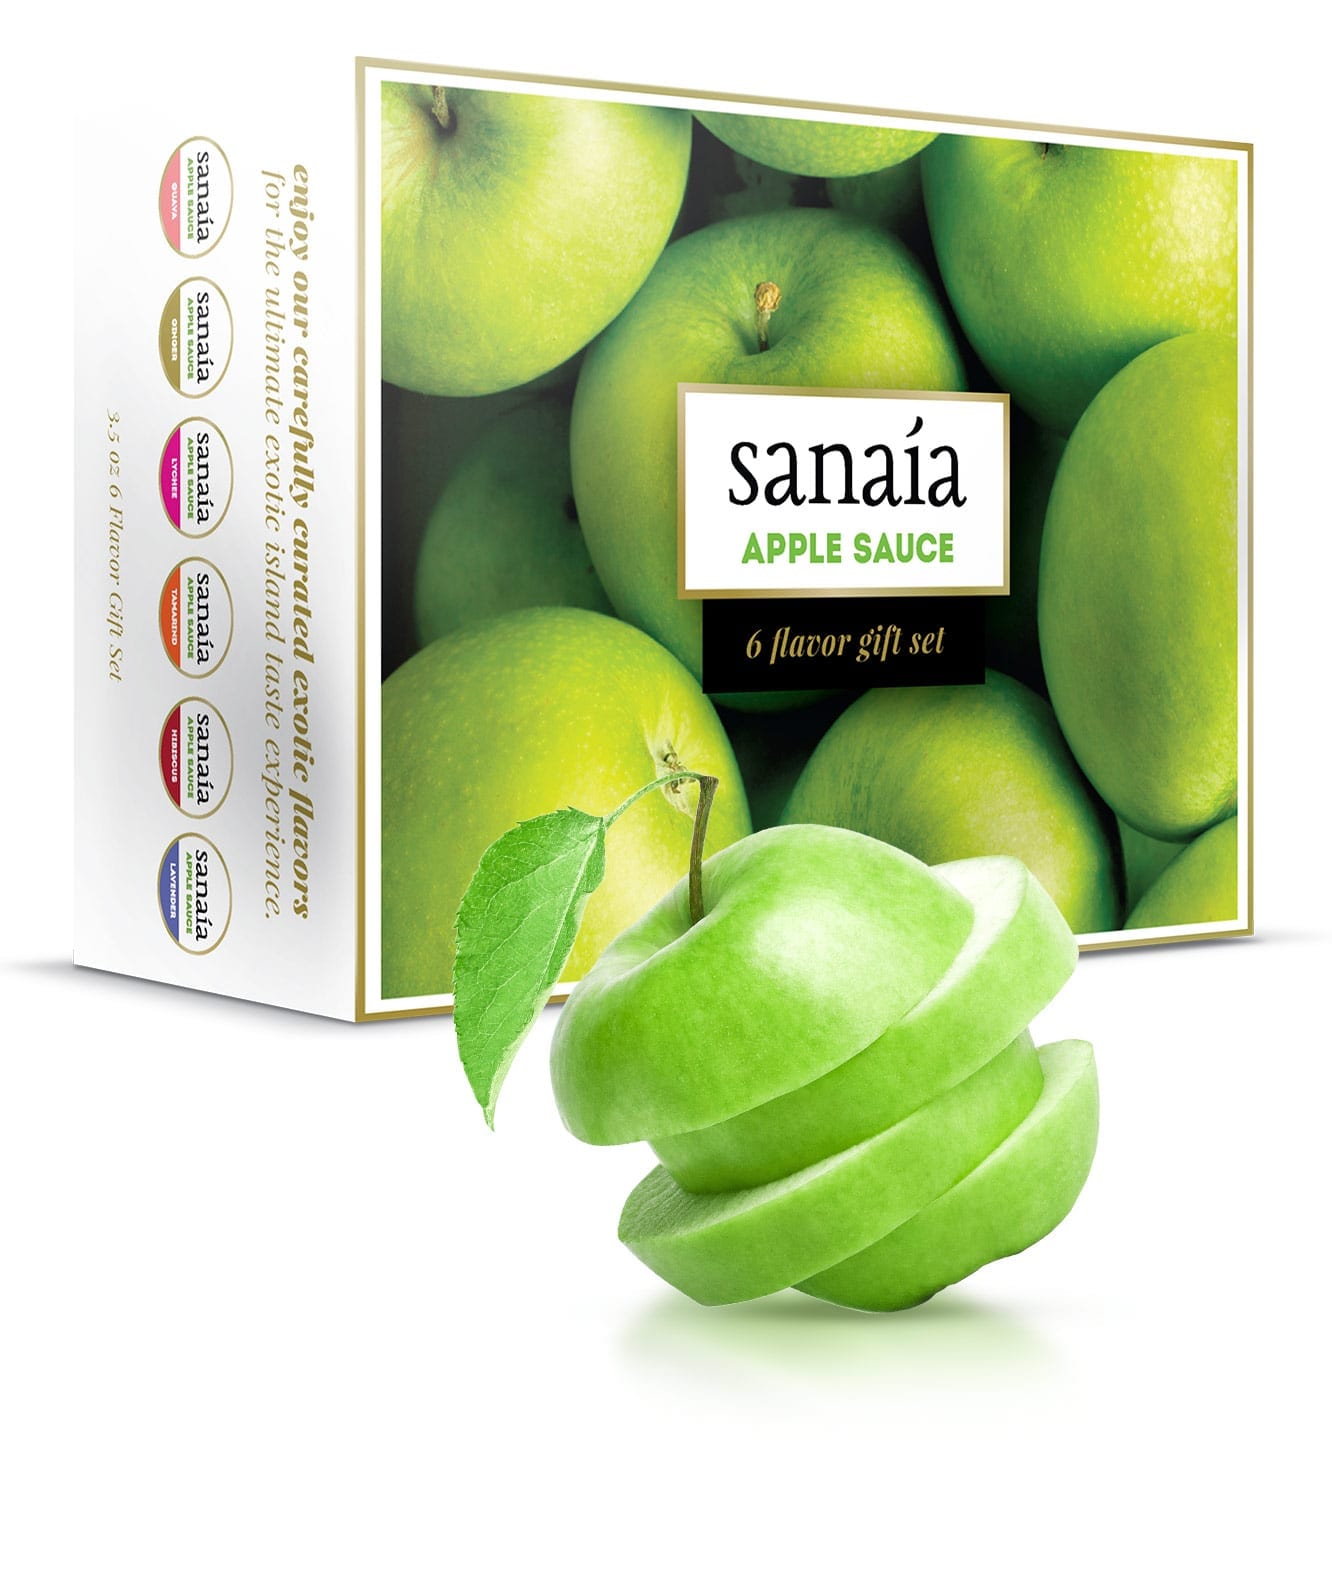 sanaia applesauce package design